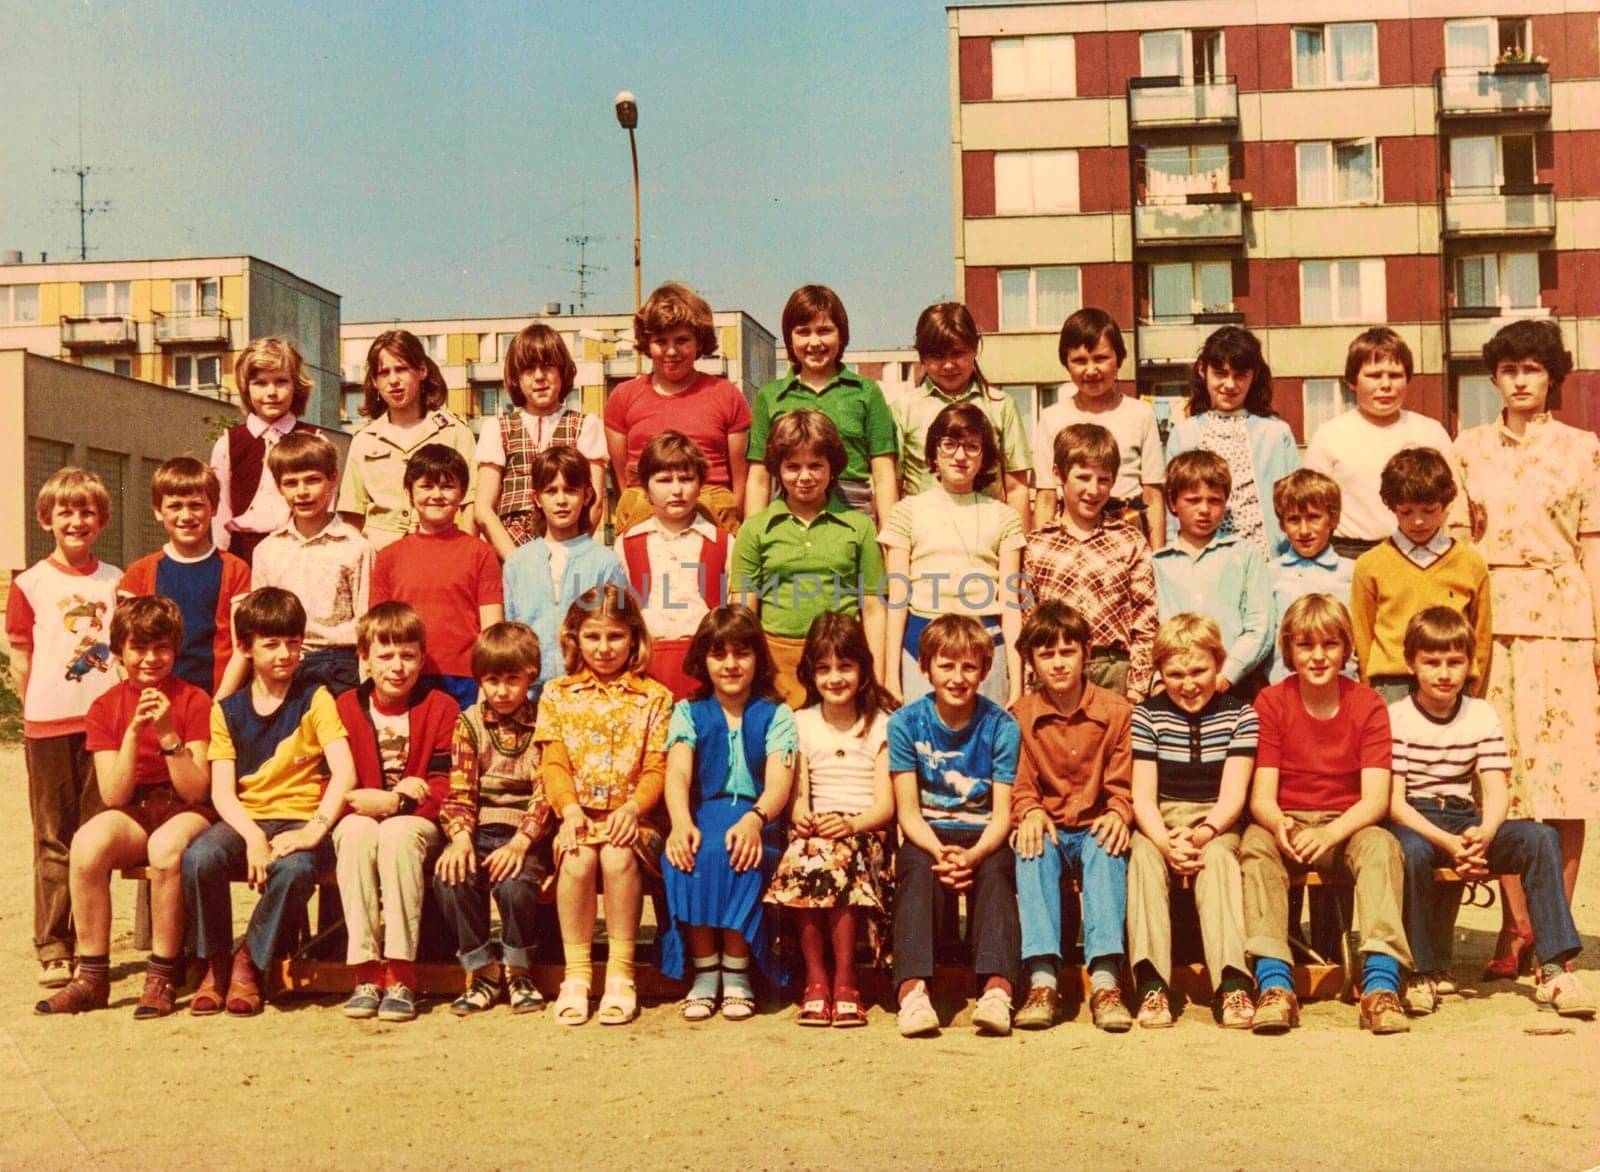 THE CZECHOSLOVAK SOCIALIST REPUBLIC - CIRCA 1980s: Retro photo shows pupils (schoolmates) and their female teacher. Color photography.